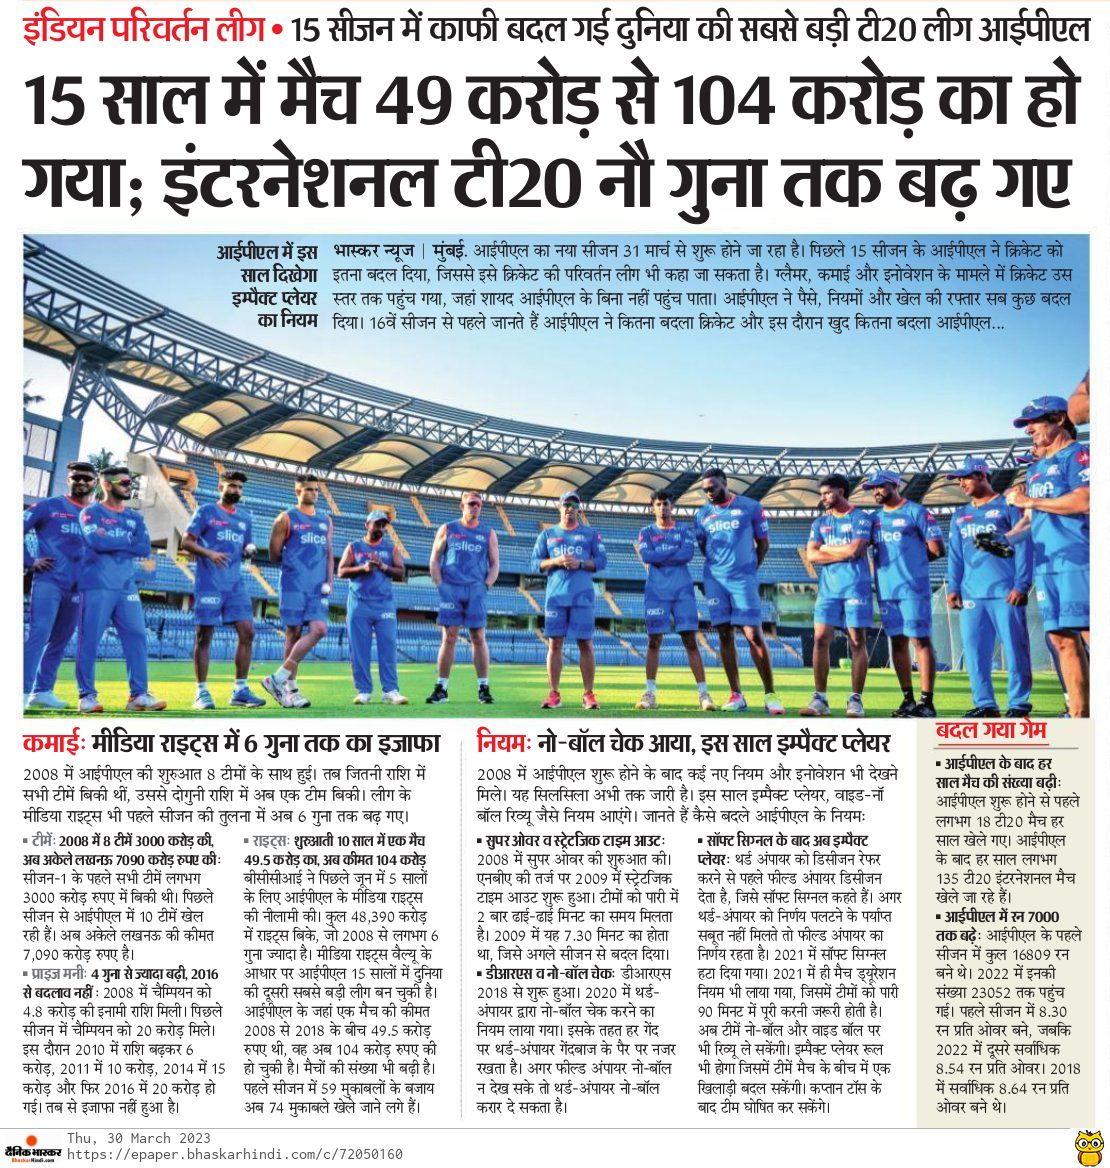 The world's biggest T20 league IPL has changed a lot in 15 seasons
@IPL @IPLFantasy @ChennaiIPL @PunjabKingsIPL @LucknowIPL @BCCI 
#IPL2023 
#news 
#RamNavami
#My11CircleBadeSeBada
#BholaaInCinemasNow
#MTRWorldIdliDay
#राजस्थान_दिवस
#RajasthanDiwas
#LalitModi 
#जय_सियाराम
#Dasara